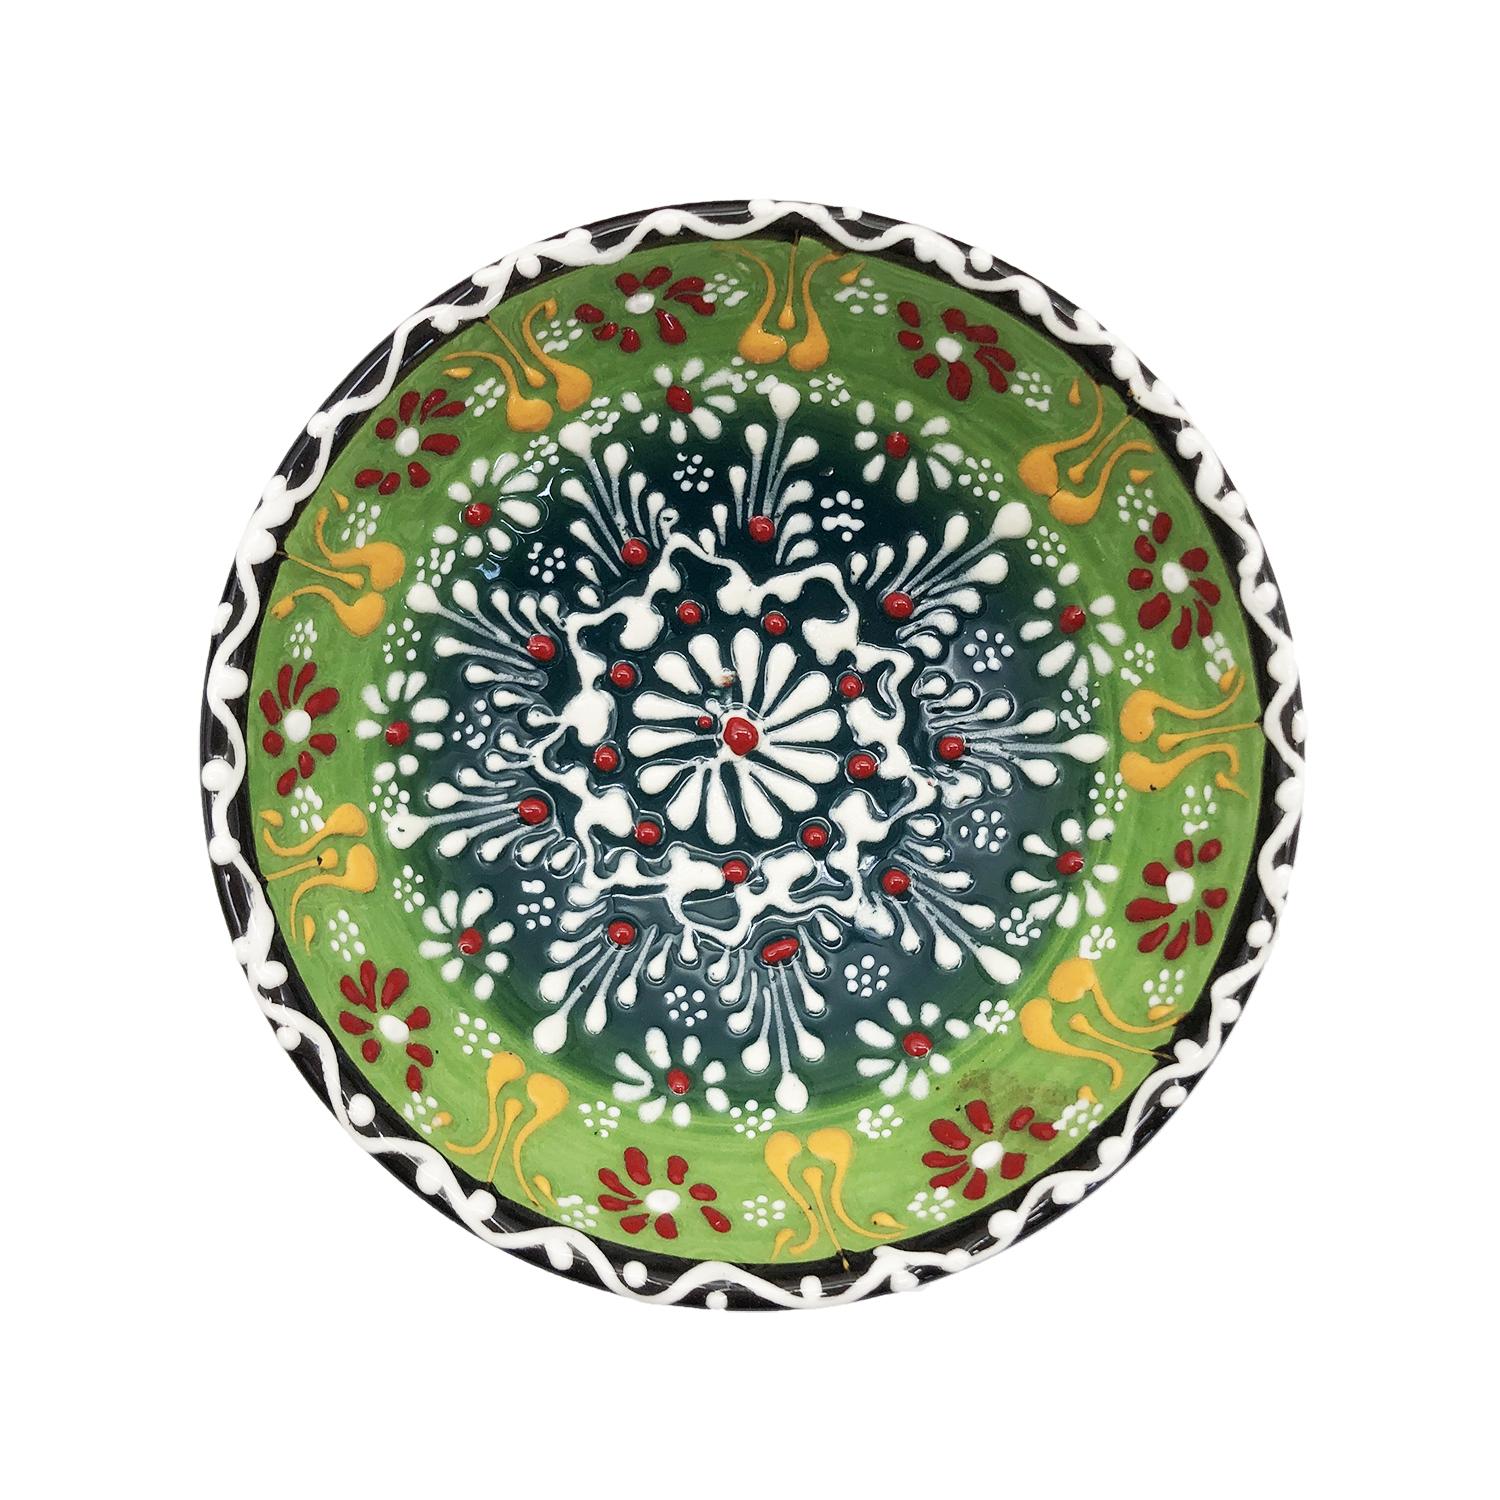 120MM手繪土耳其傳統工藝陶瓷碗， 土耳其餐具奧斯曼帝國浮雕圖案土耳其藝術時尚潮物(VTR-CERAMIC-BOWL-120MM-30103)